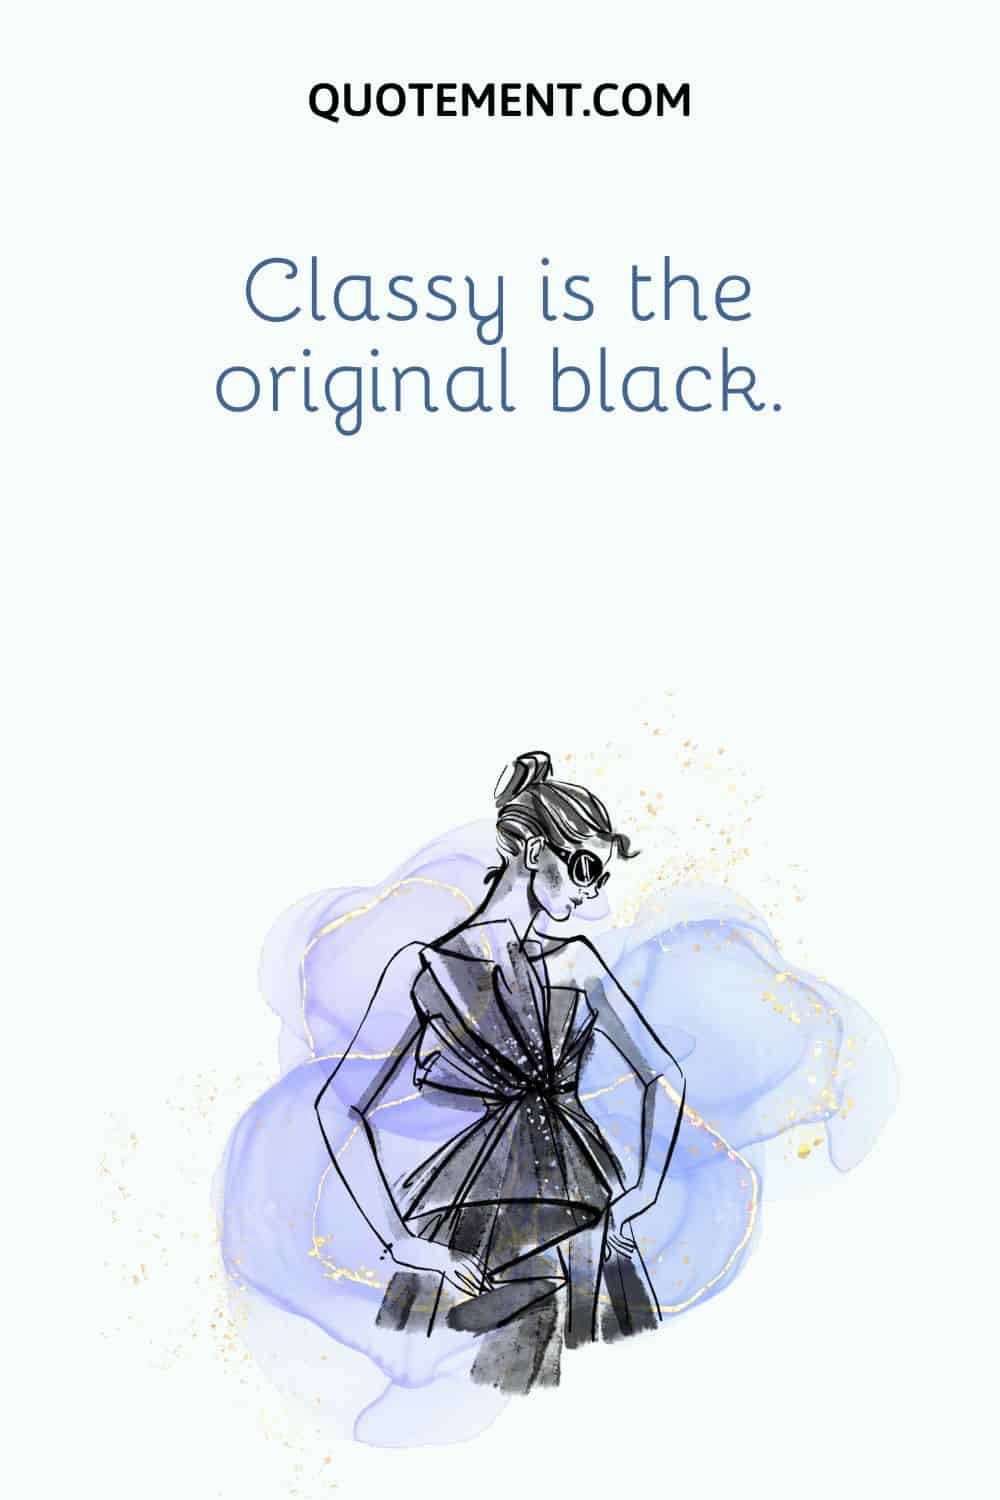 Classy is the original black.